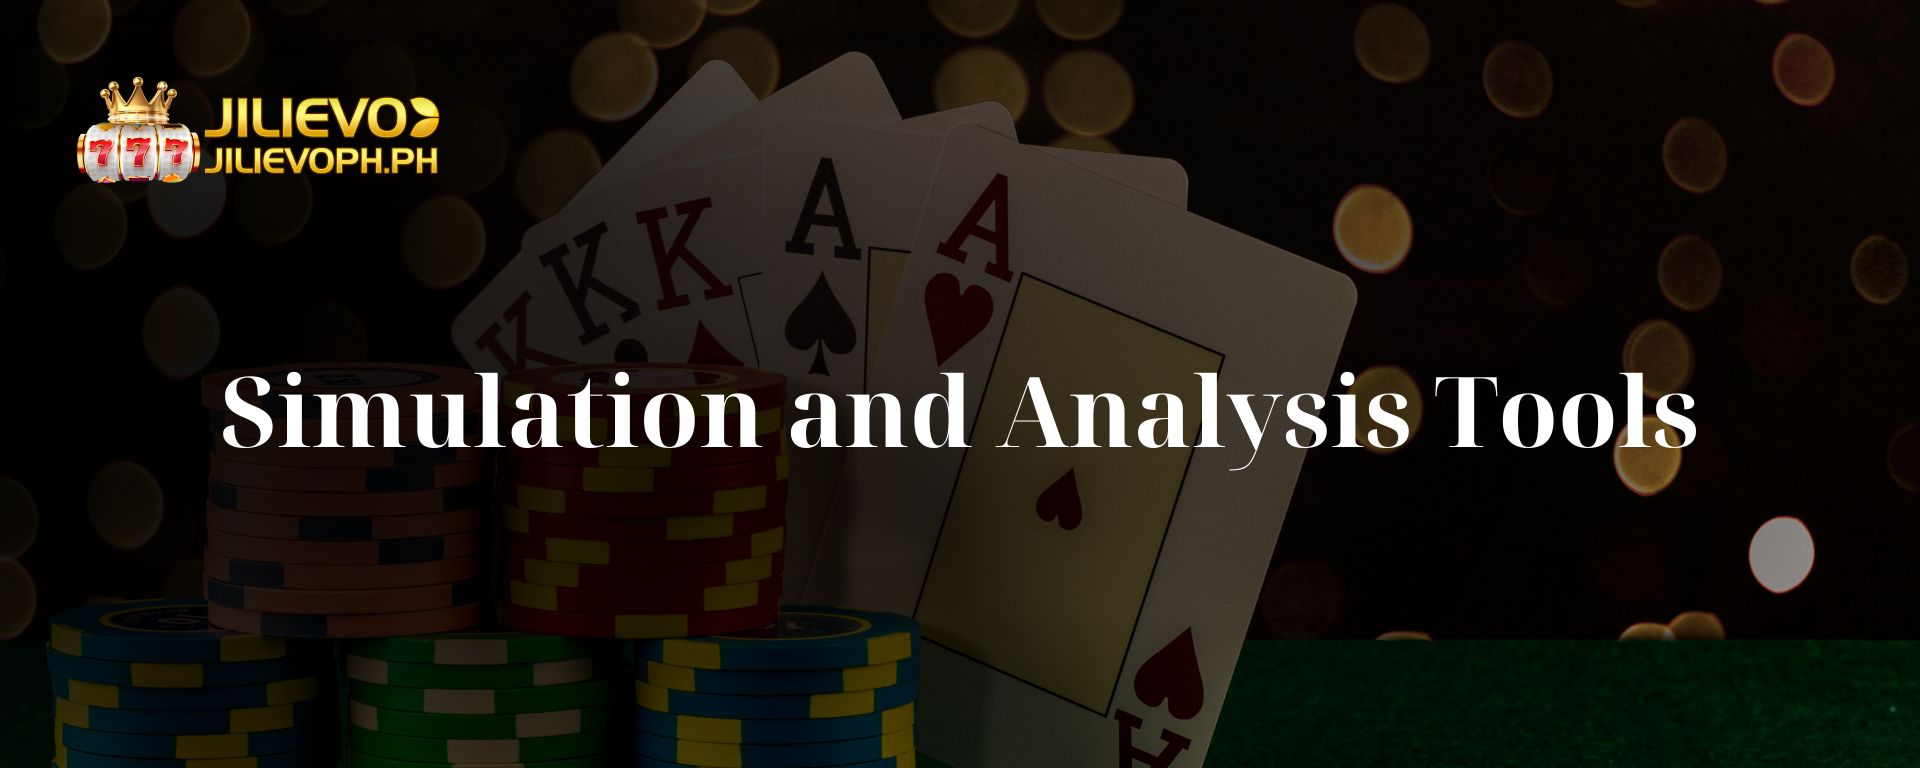 Simulation and Analysis Tools